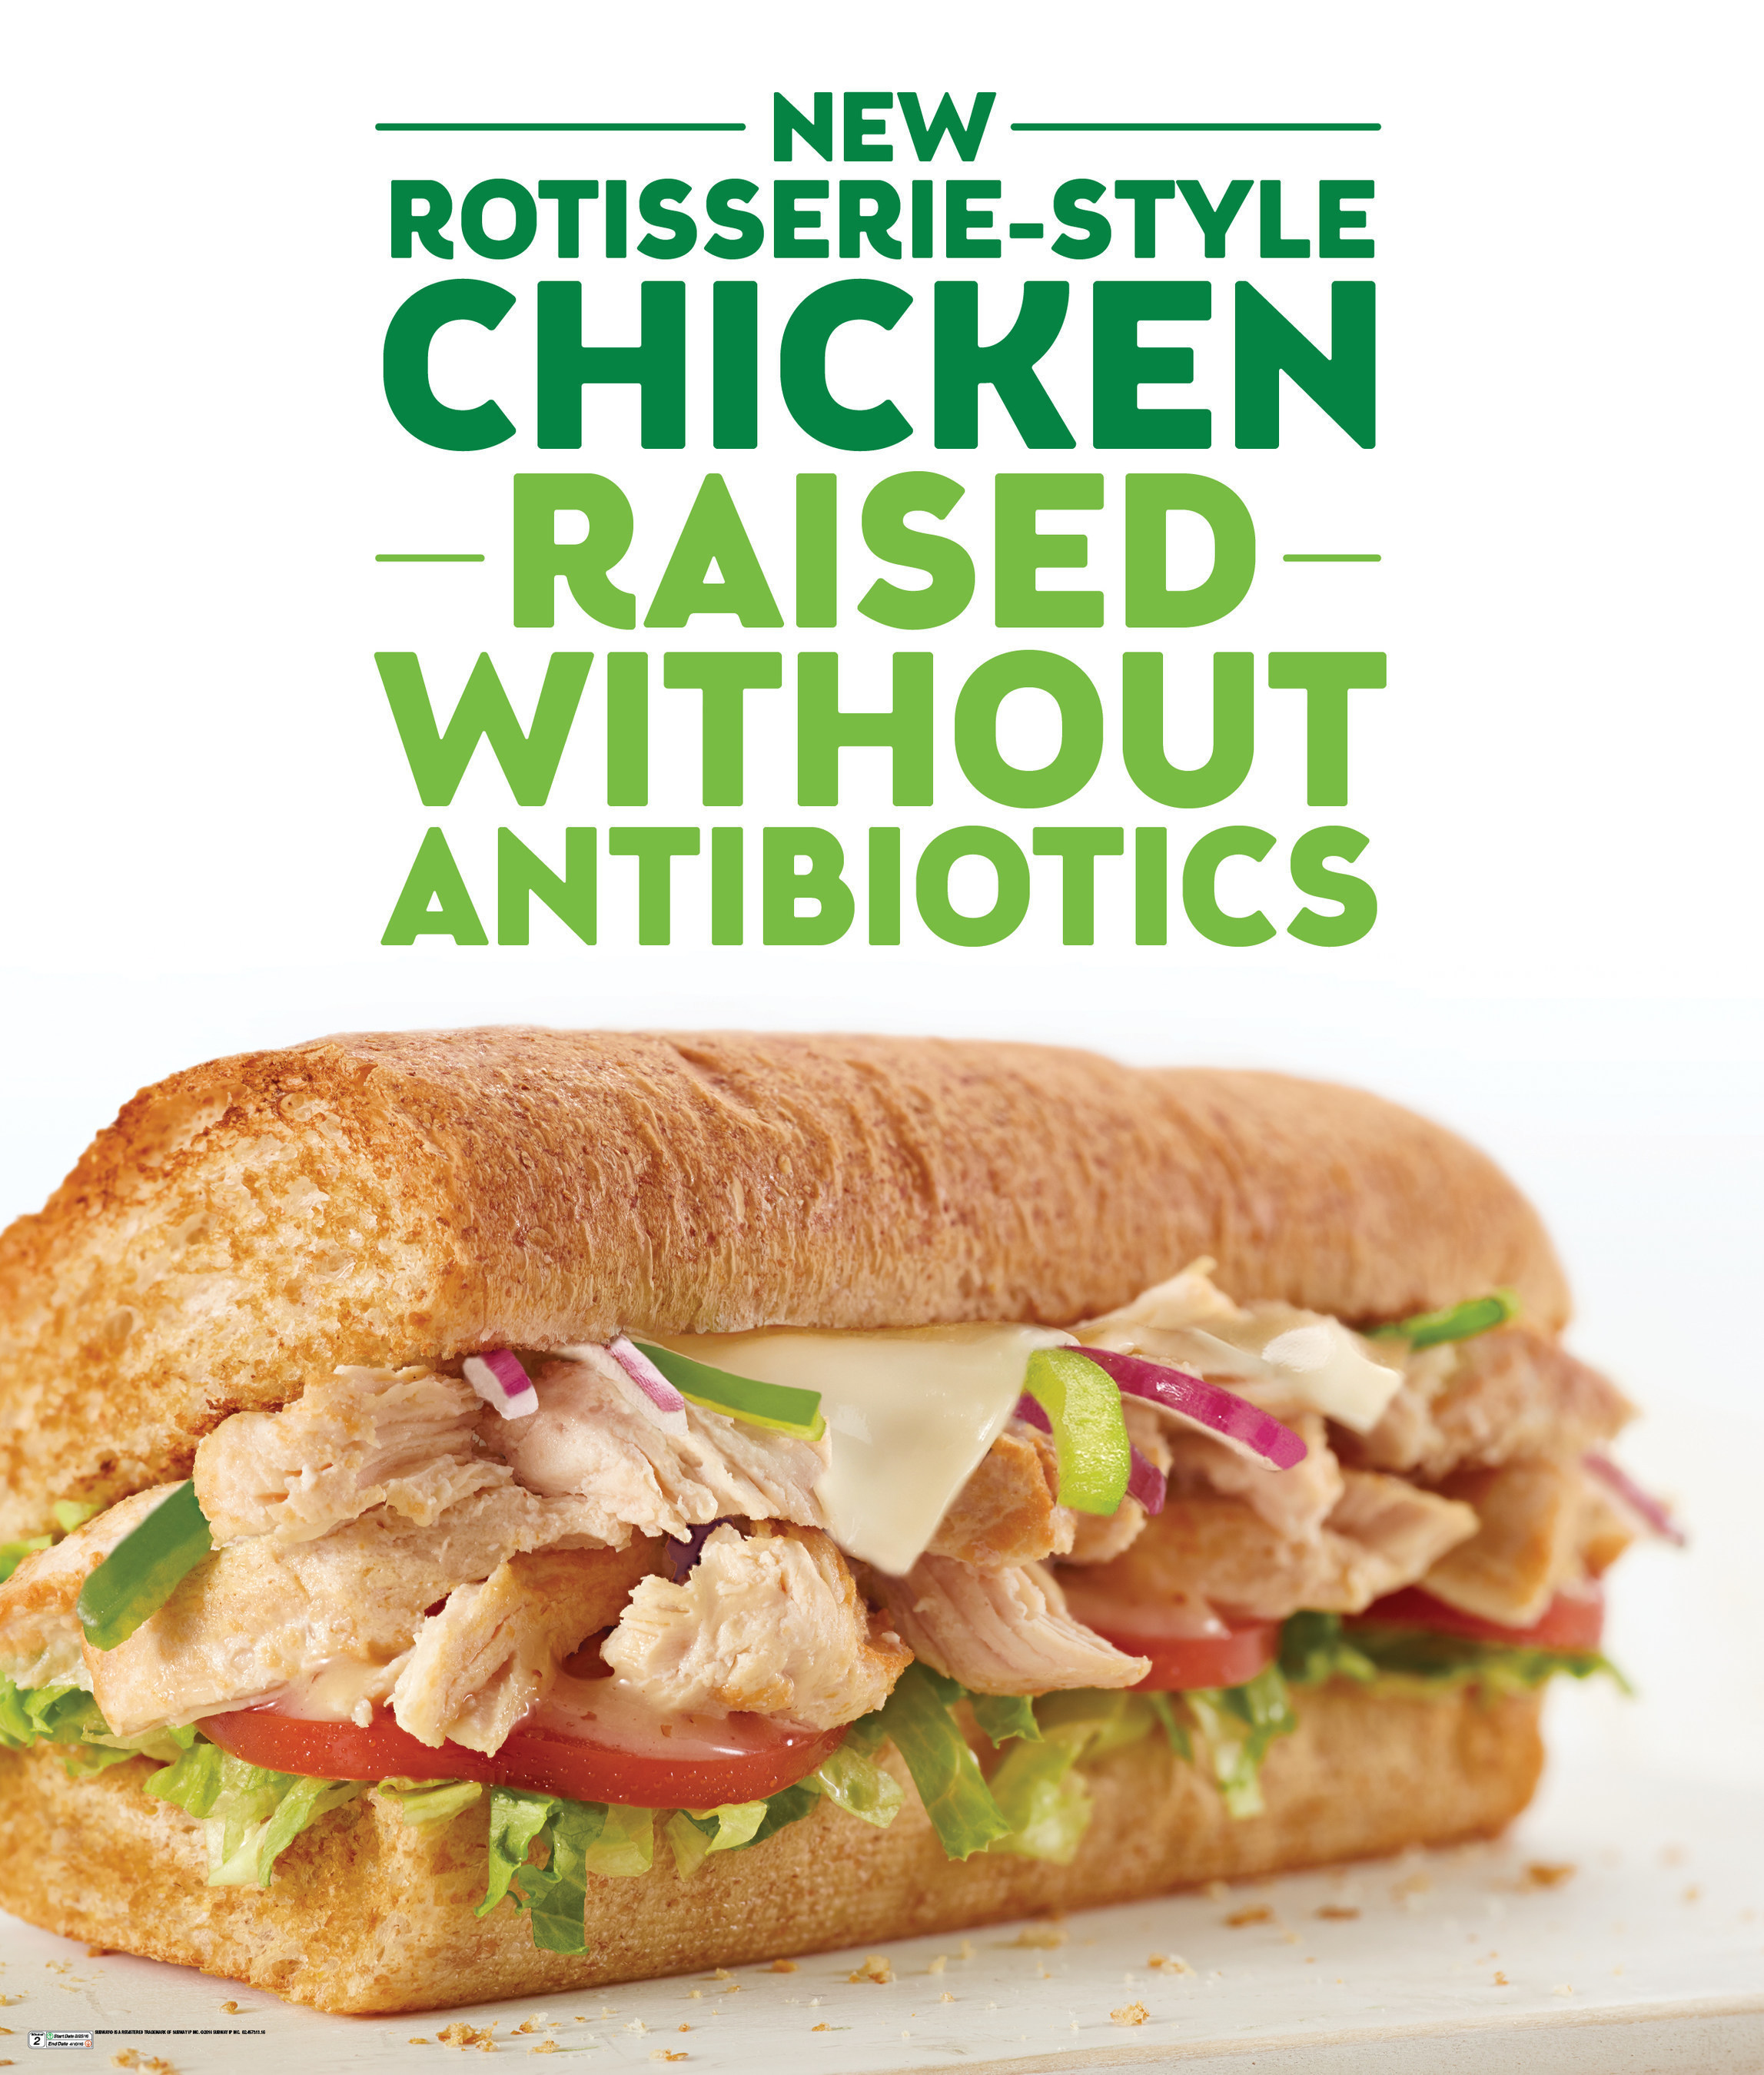 SUBWAY(R) Sandwich Shop Introduces New Rotisserie-Style Chicken Raised without Antibiotics